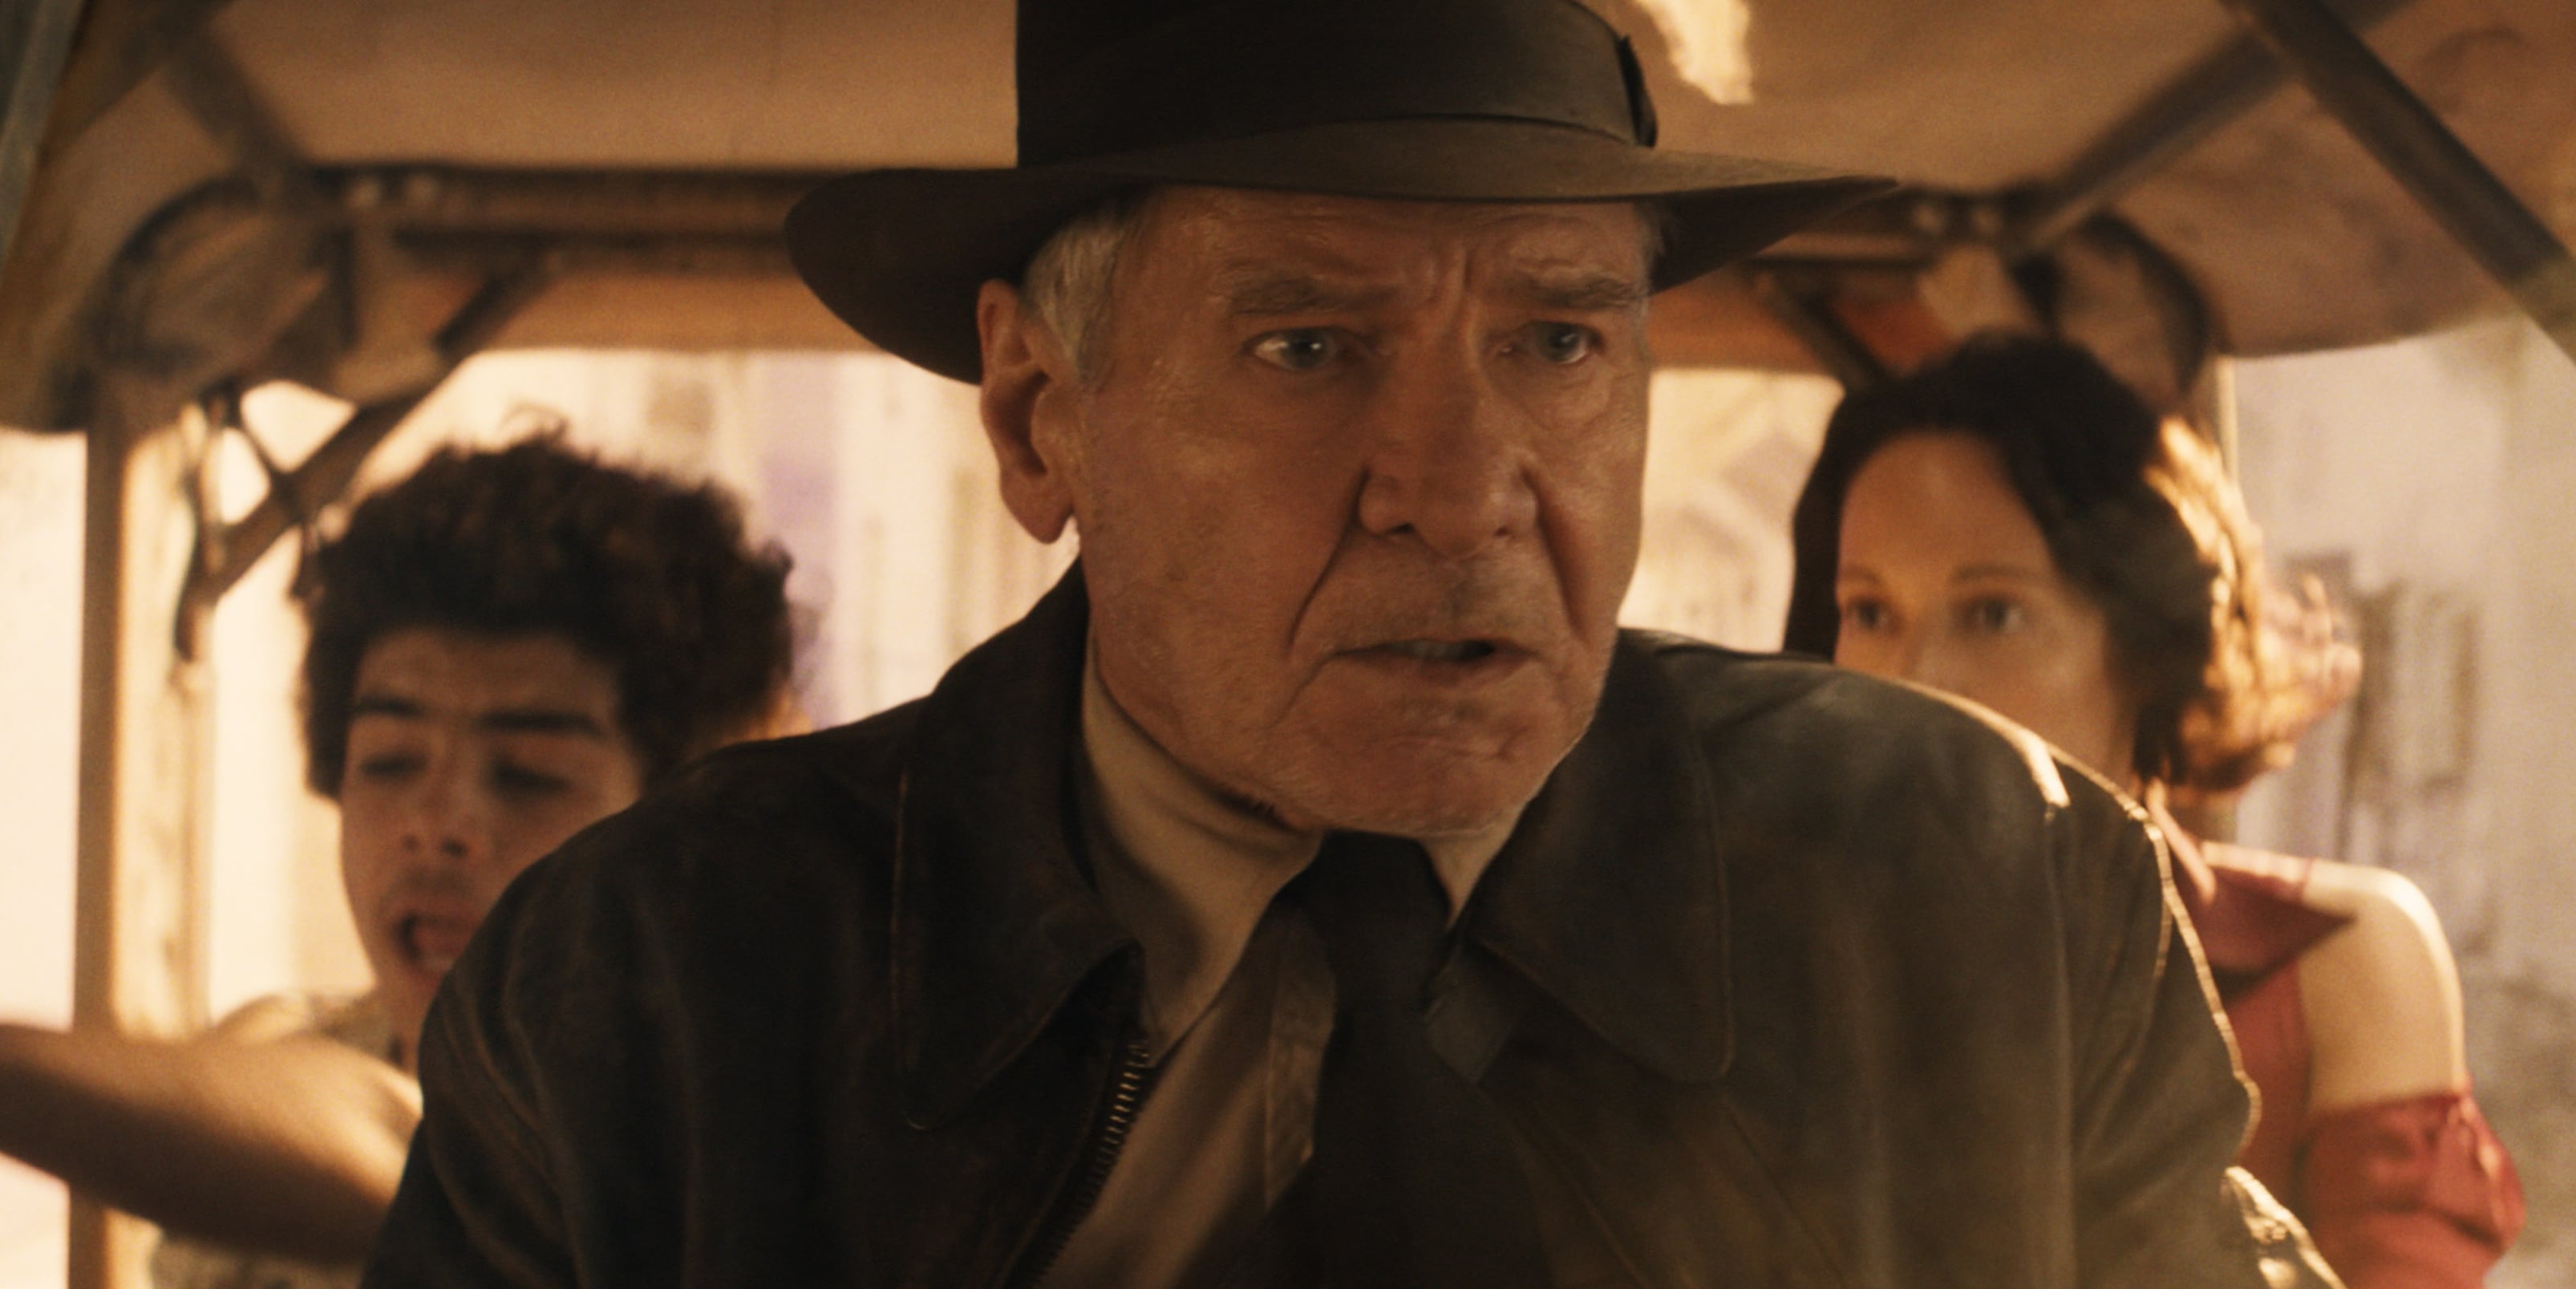 Indiana Jones 5: Trailer, Release Date, Cast, and More | POPSUGAR ...